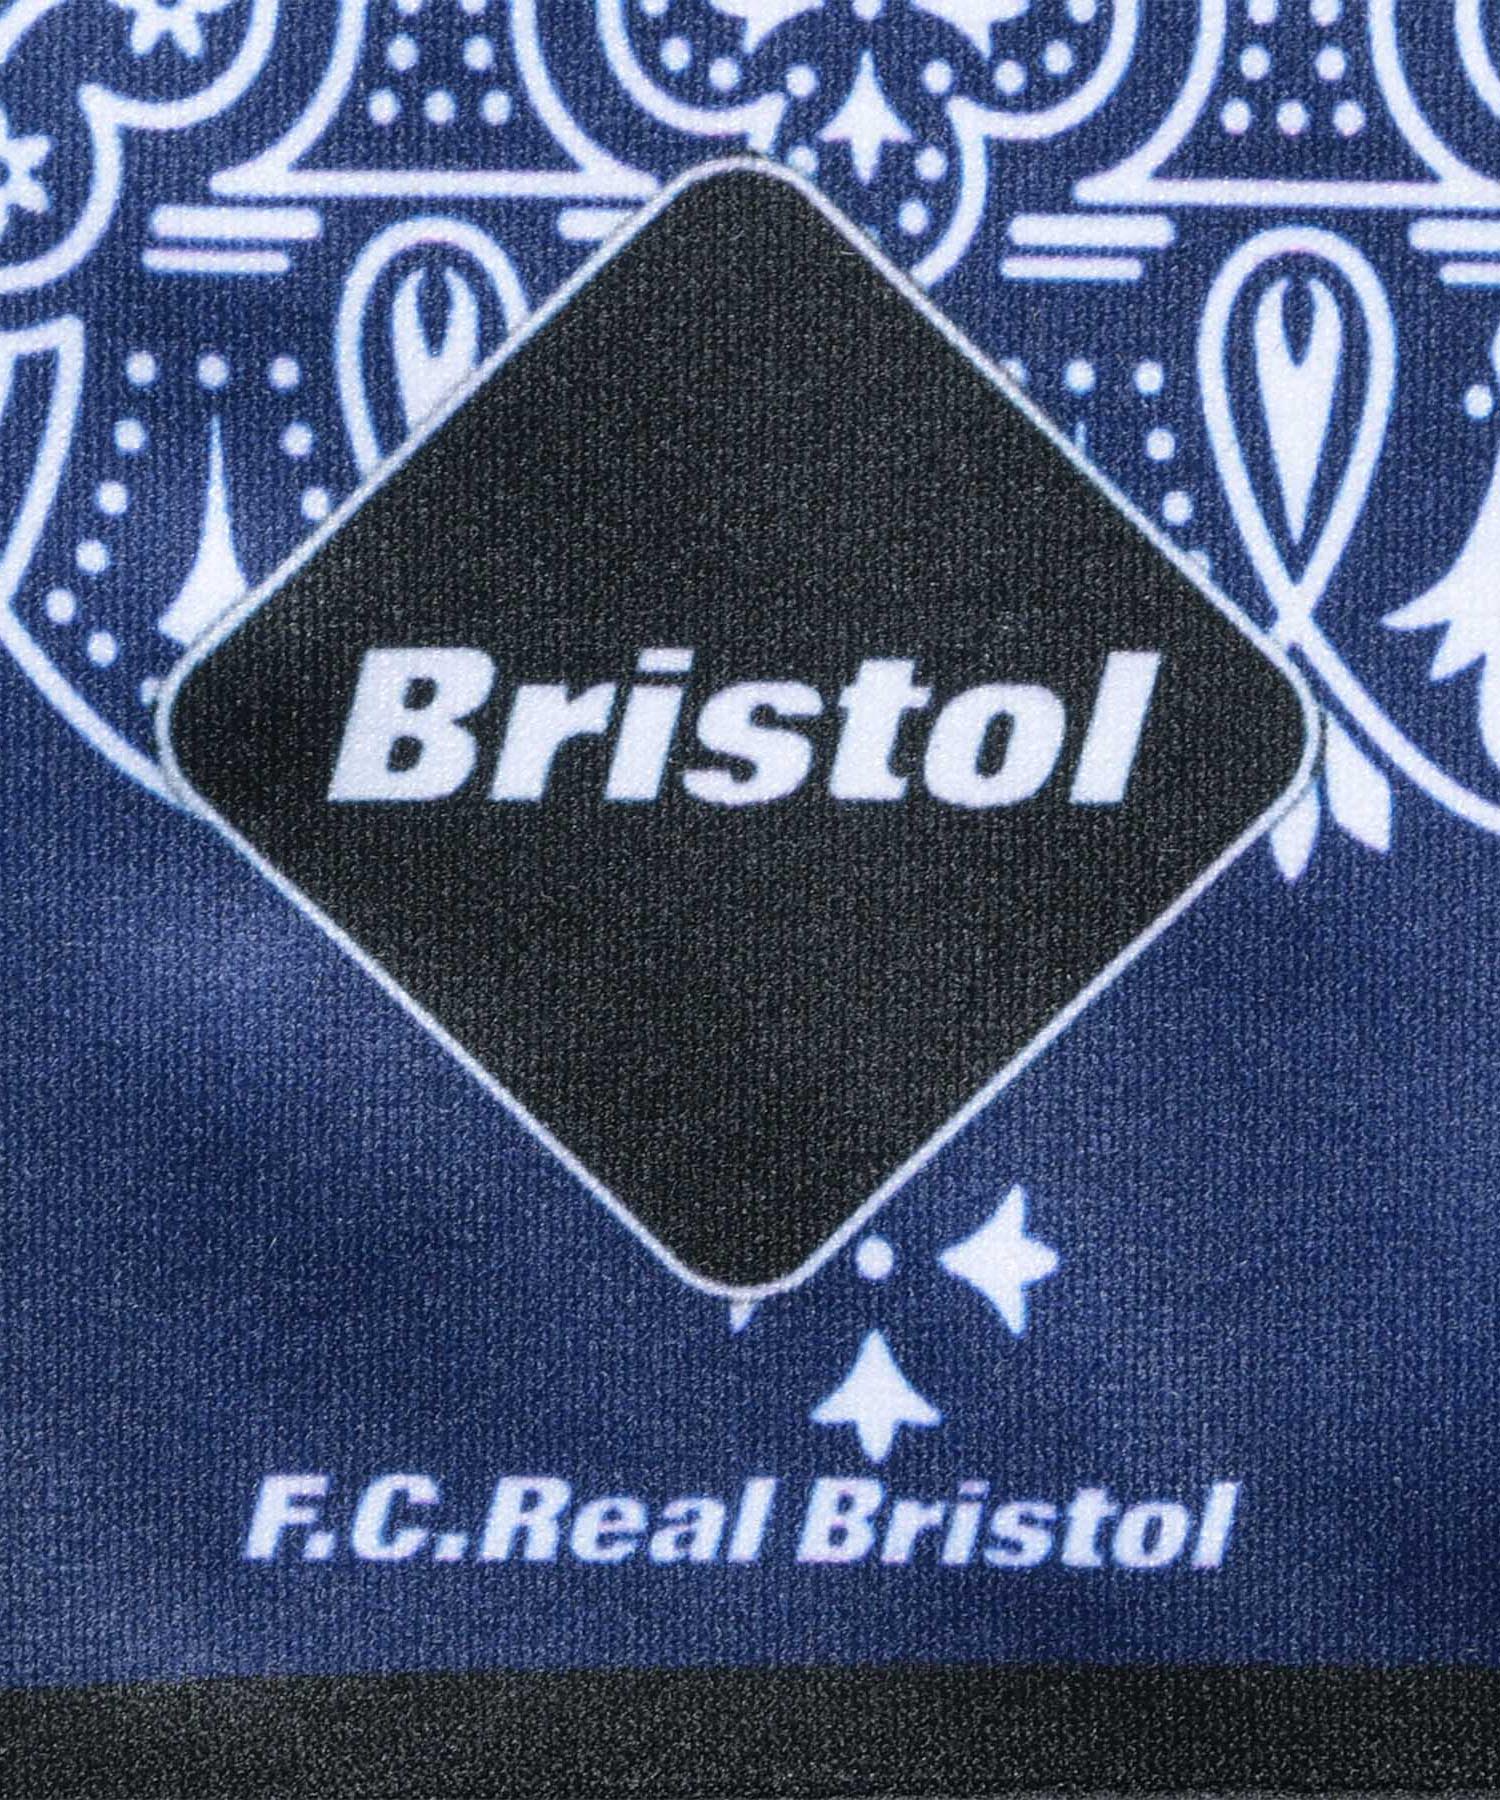 BETONES BOXER TRUNKS F.C.Real Bristol